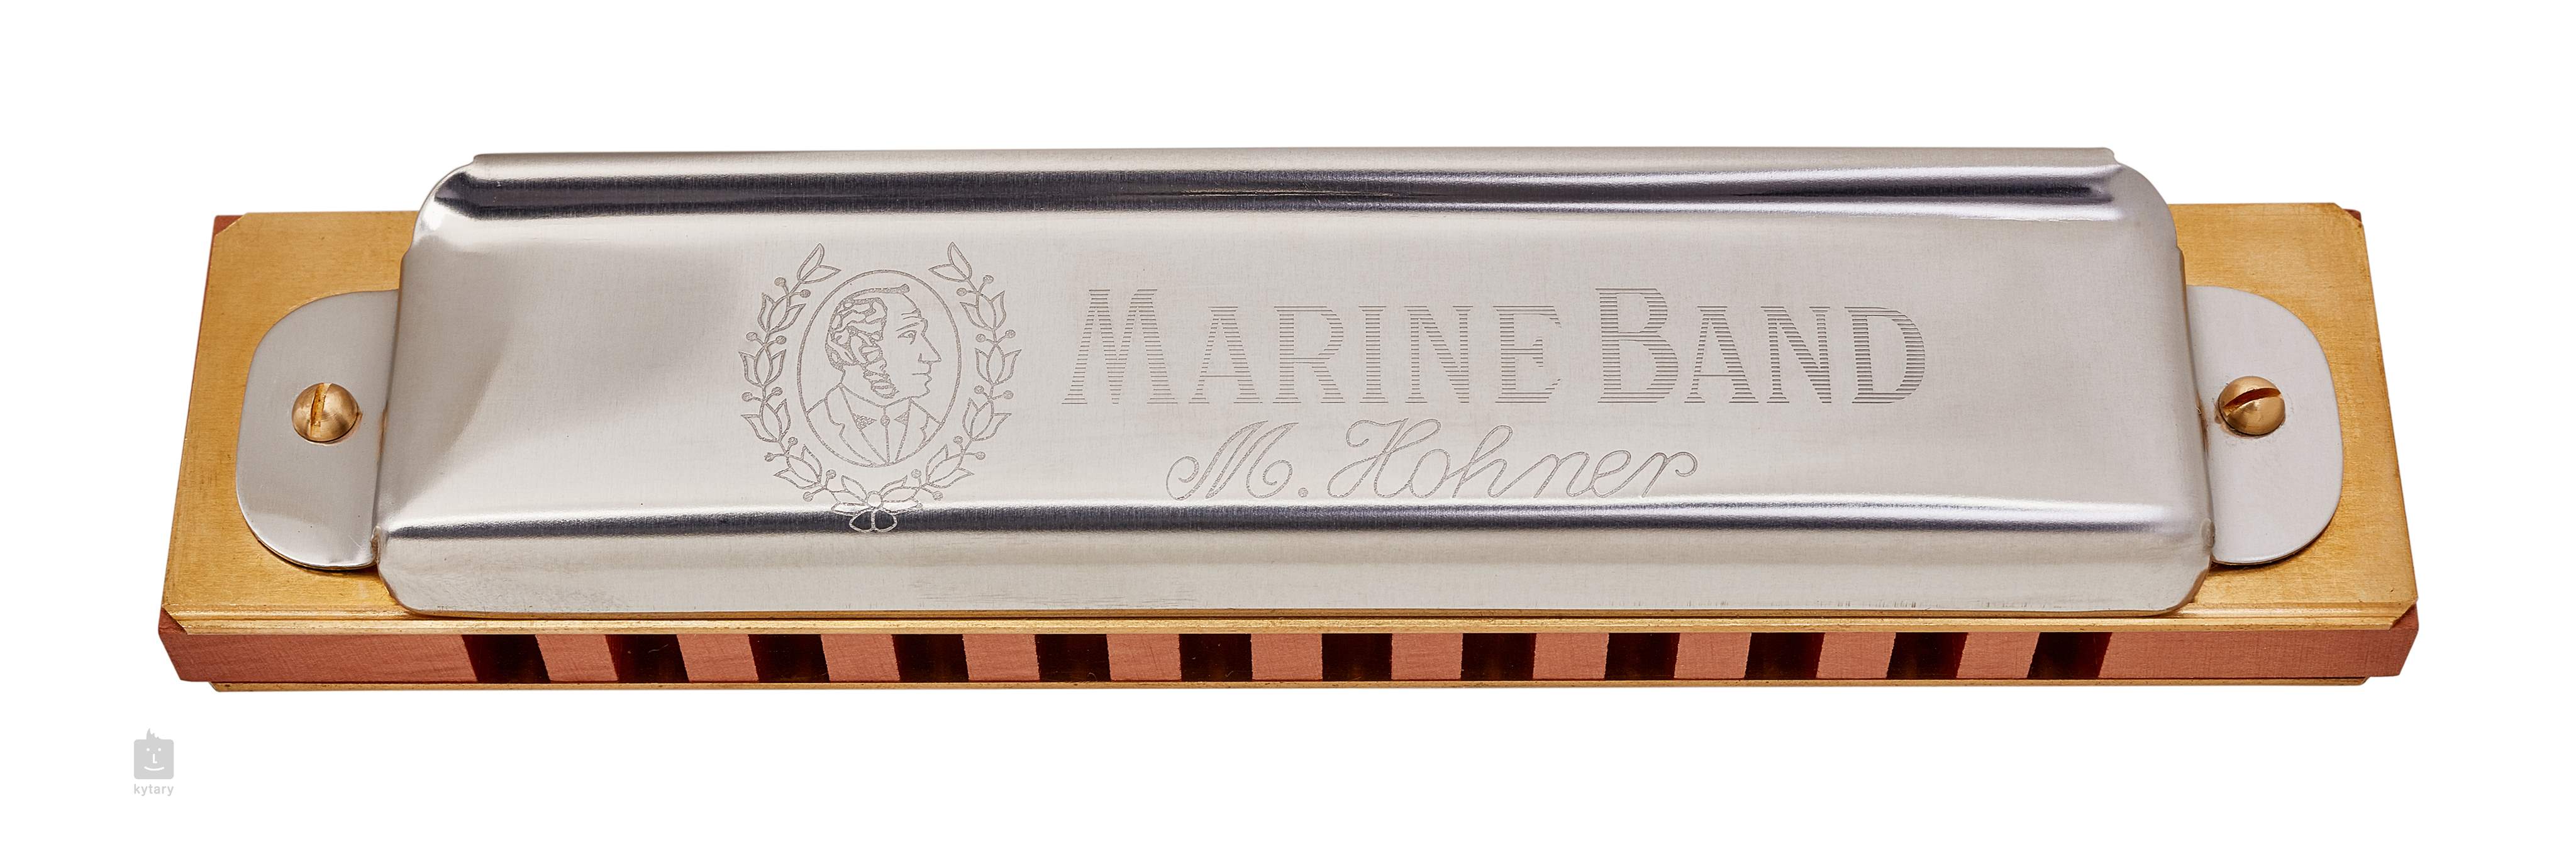 Hohner Marine Band 364 24 C Harmonijka Ustna